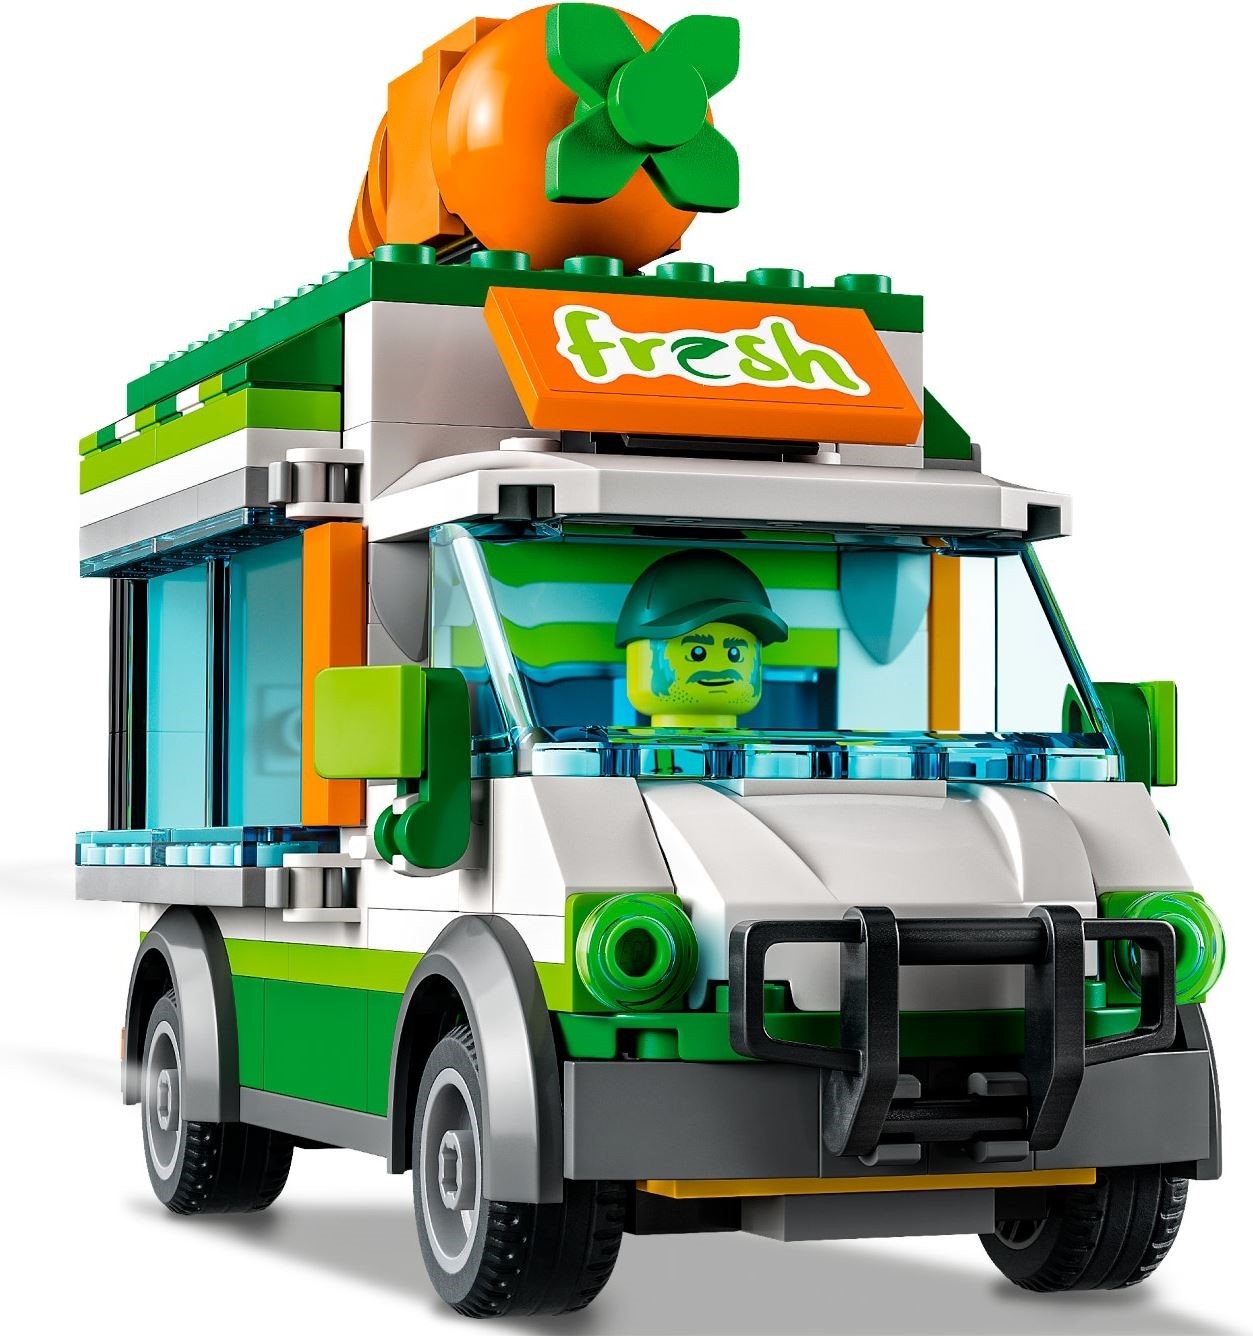 LEGO City - Furgoneta fermierului 60345, 310 piese